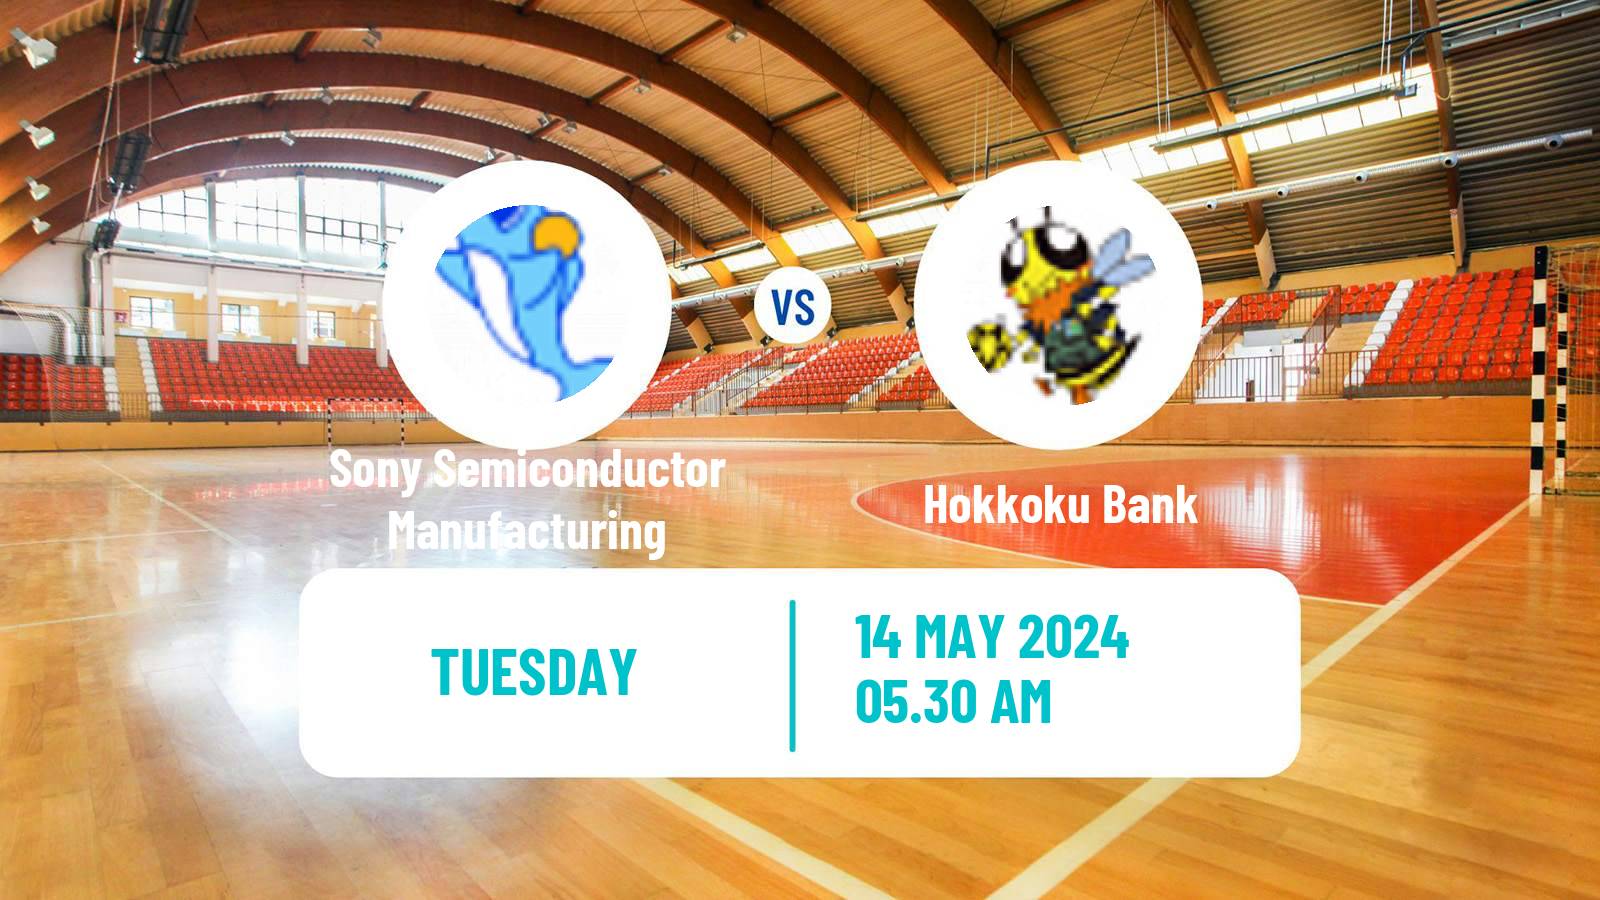 Handball Japan JHL Handball Women Sony Semiconductor Manufacturing - Hokkoku Bank